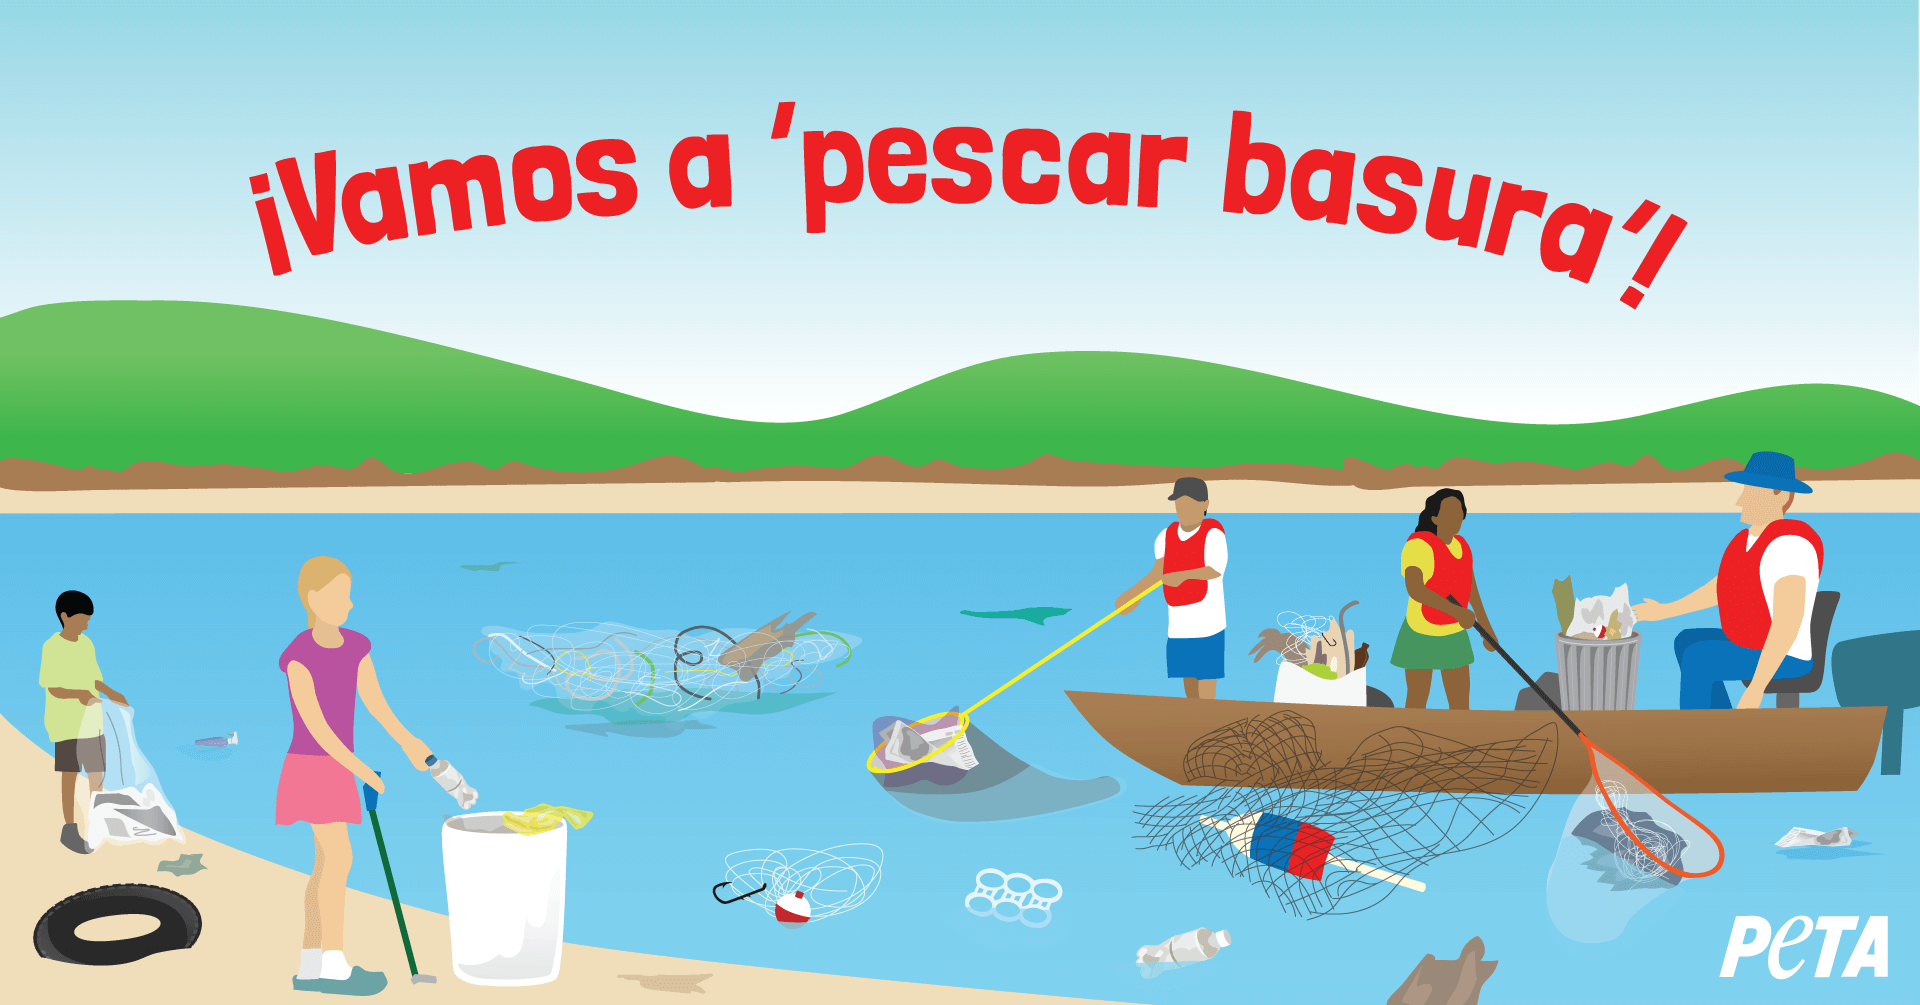 https://investigaciones.petalatino.com/wp-content/uploads/2021/07/petalatino-trash-fishing-header-illustration.png